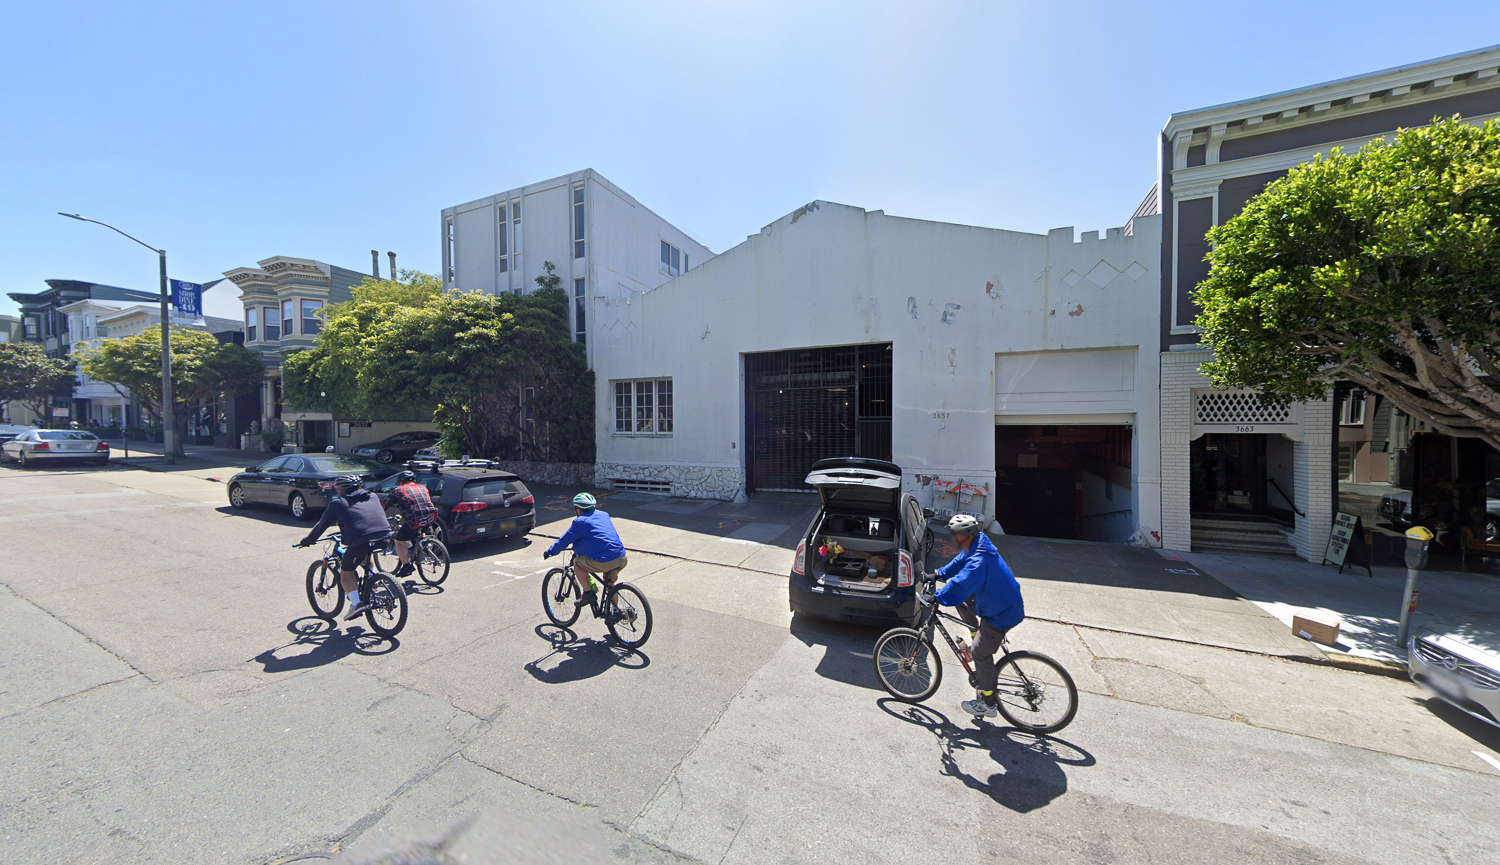 3637-3657 Sacramento Street, image via Google Street View circa May 2019